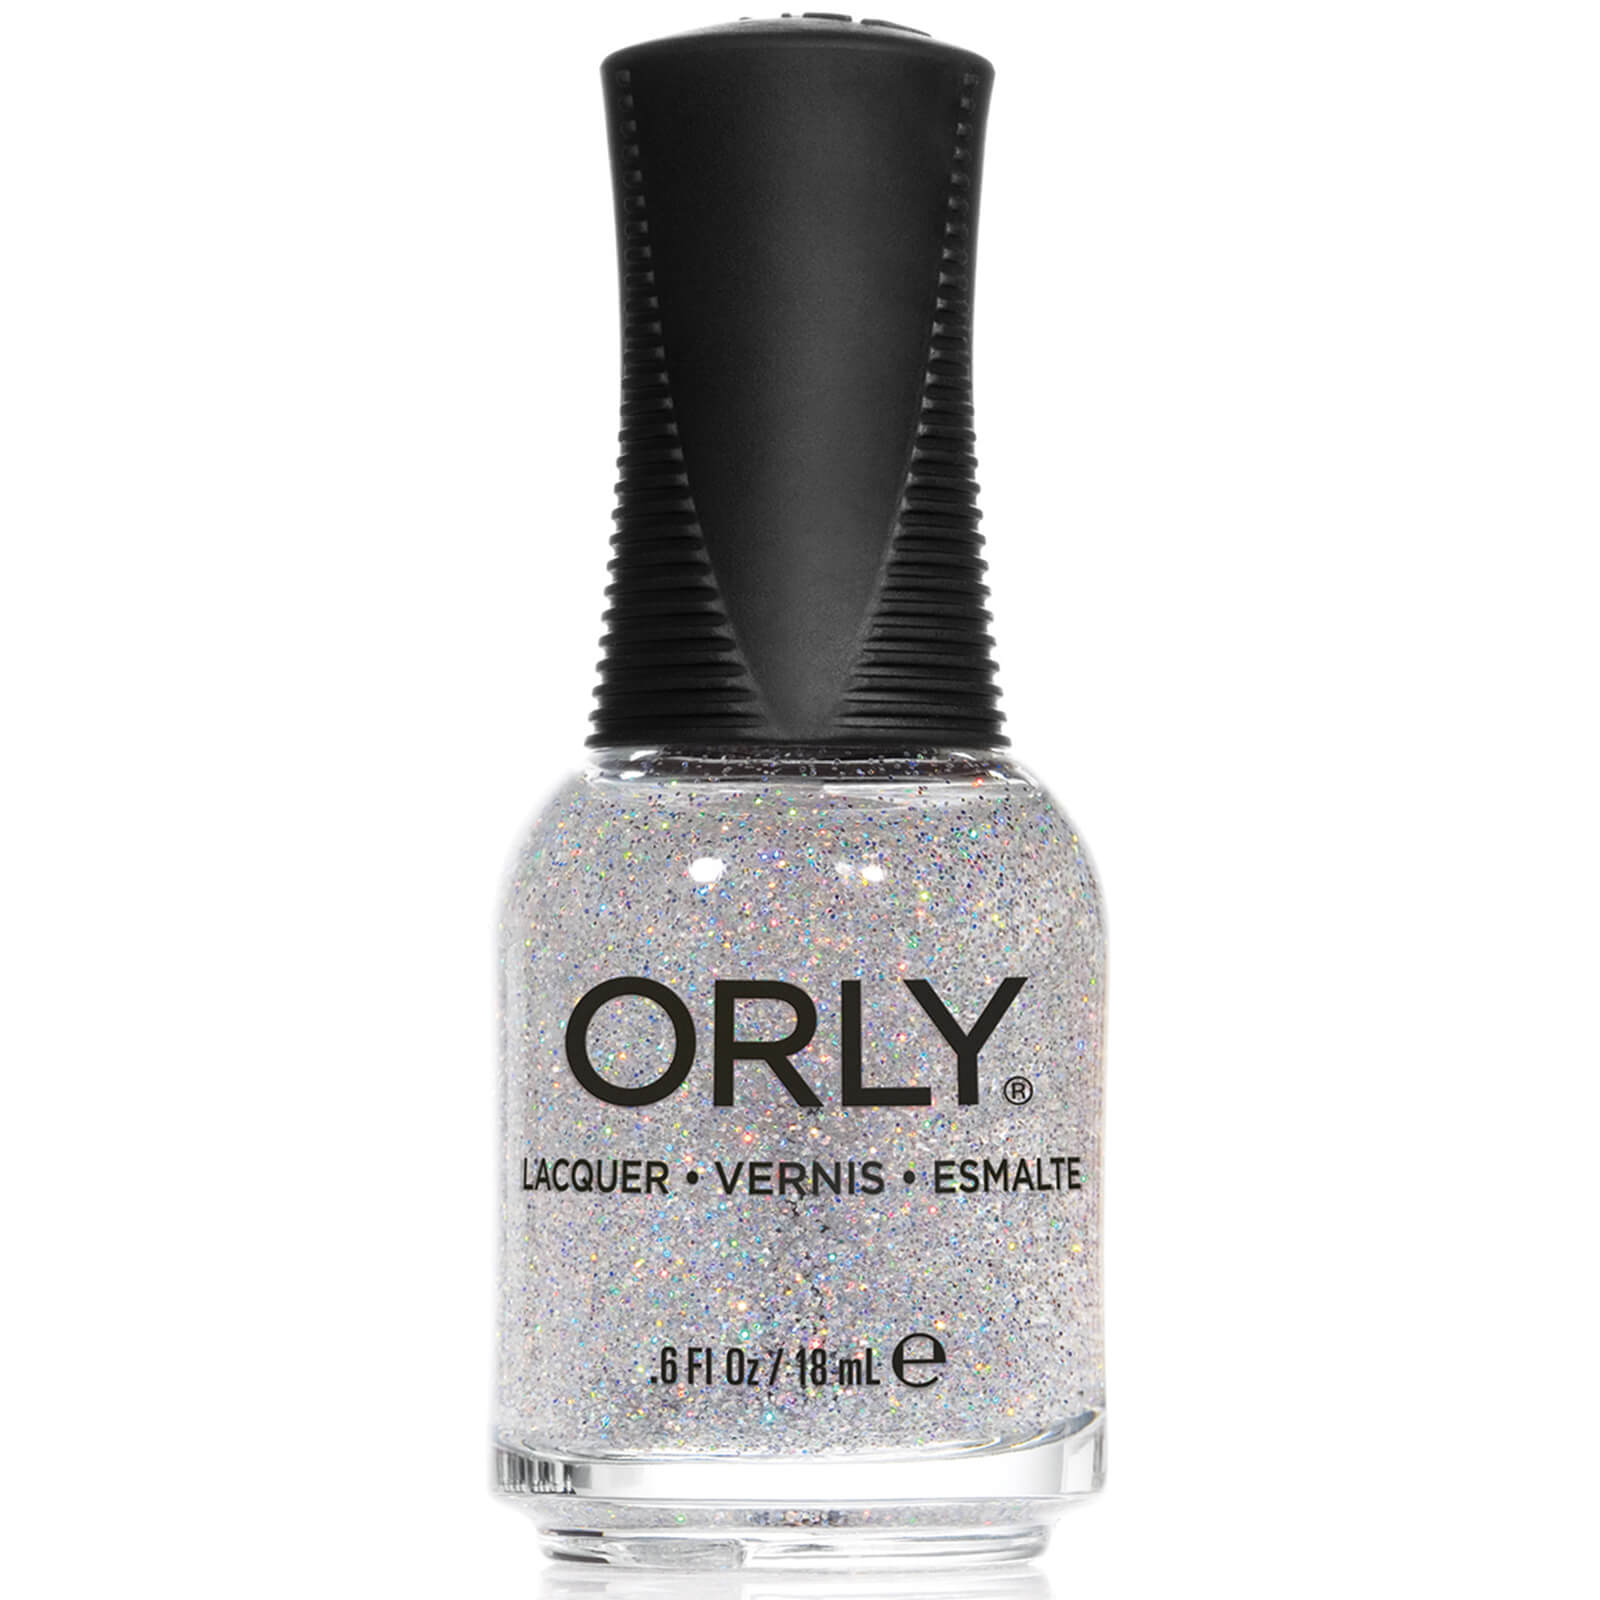 Orly Nail Lacquer 18ml (Various Shades) – Shine On Crazy Diamond lookfantastic.com imagine